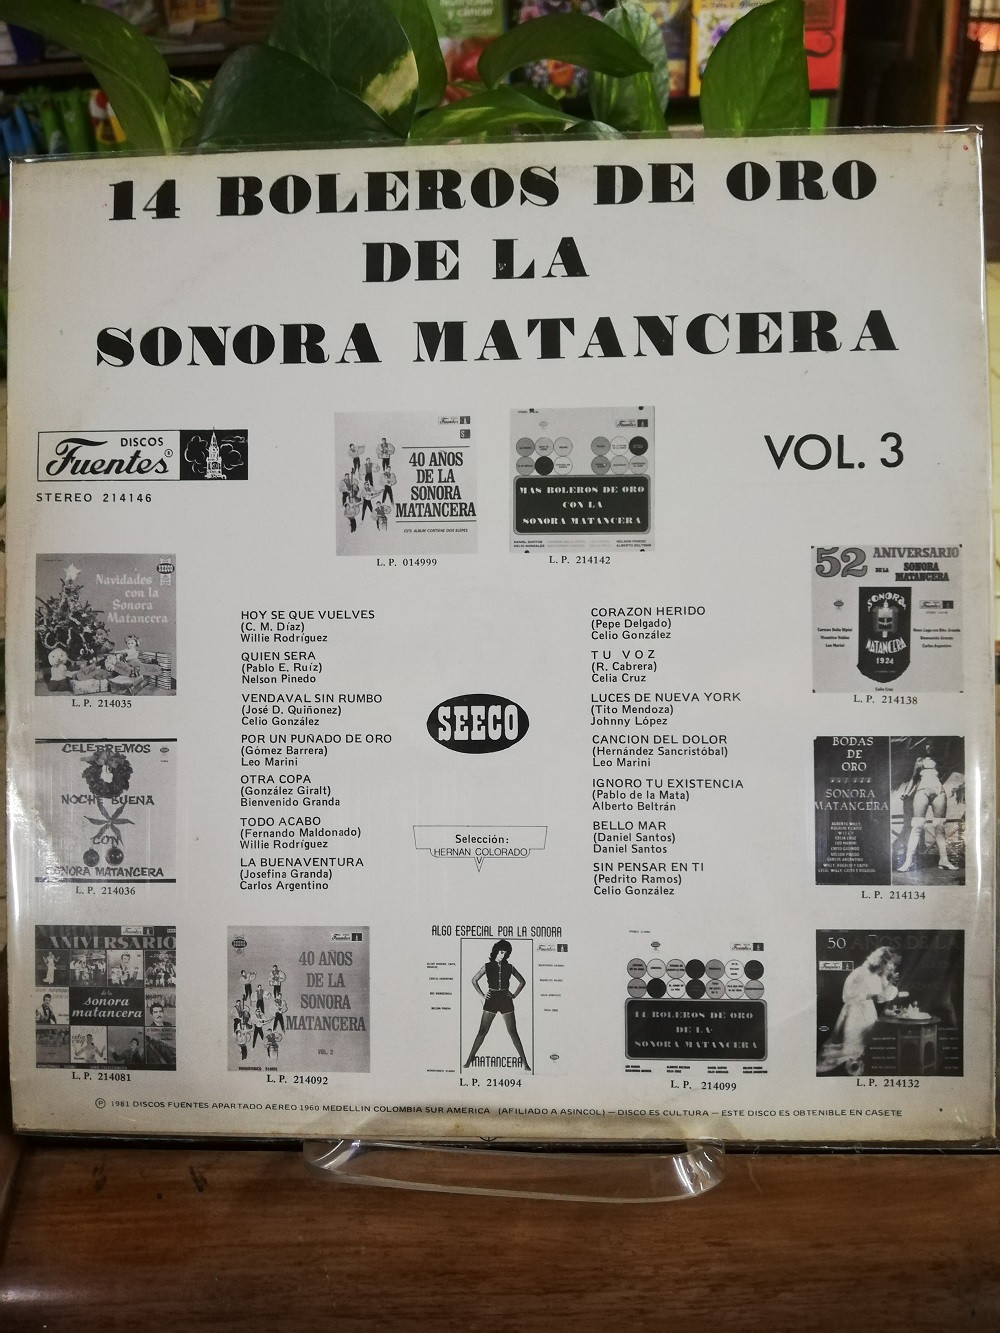 Imagen LP LA SONORA MATANCERA - 14 BOLEROS DE ORO VOL. 3 2